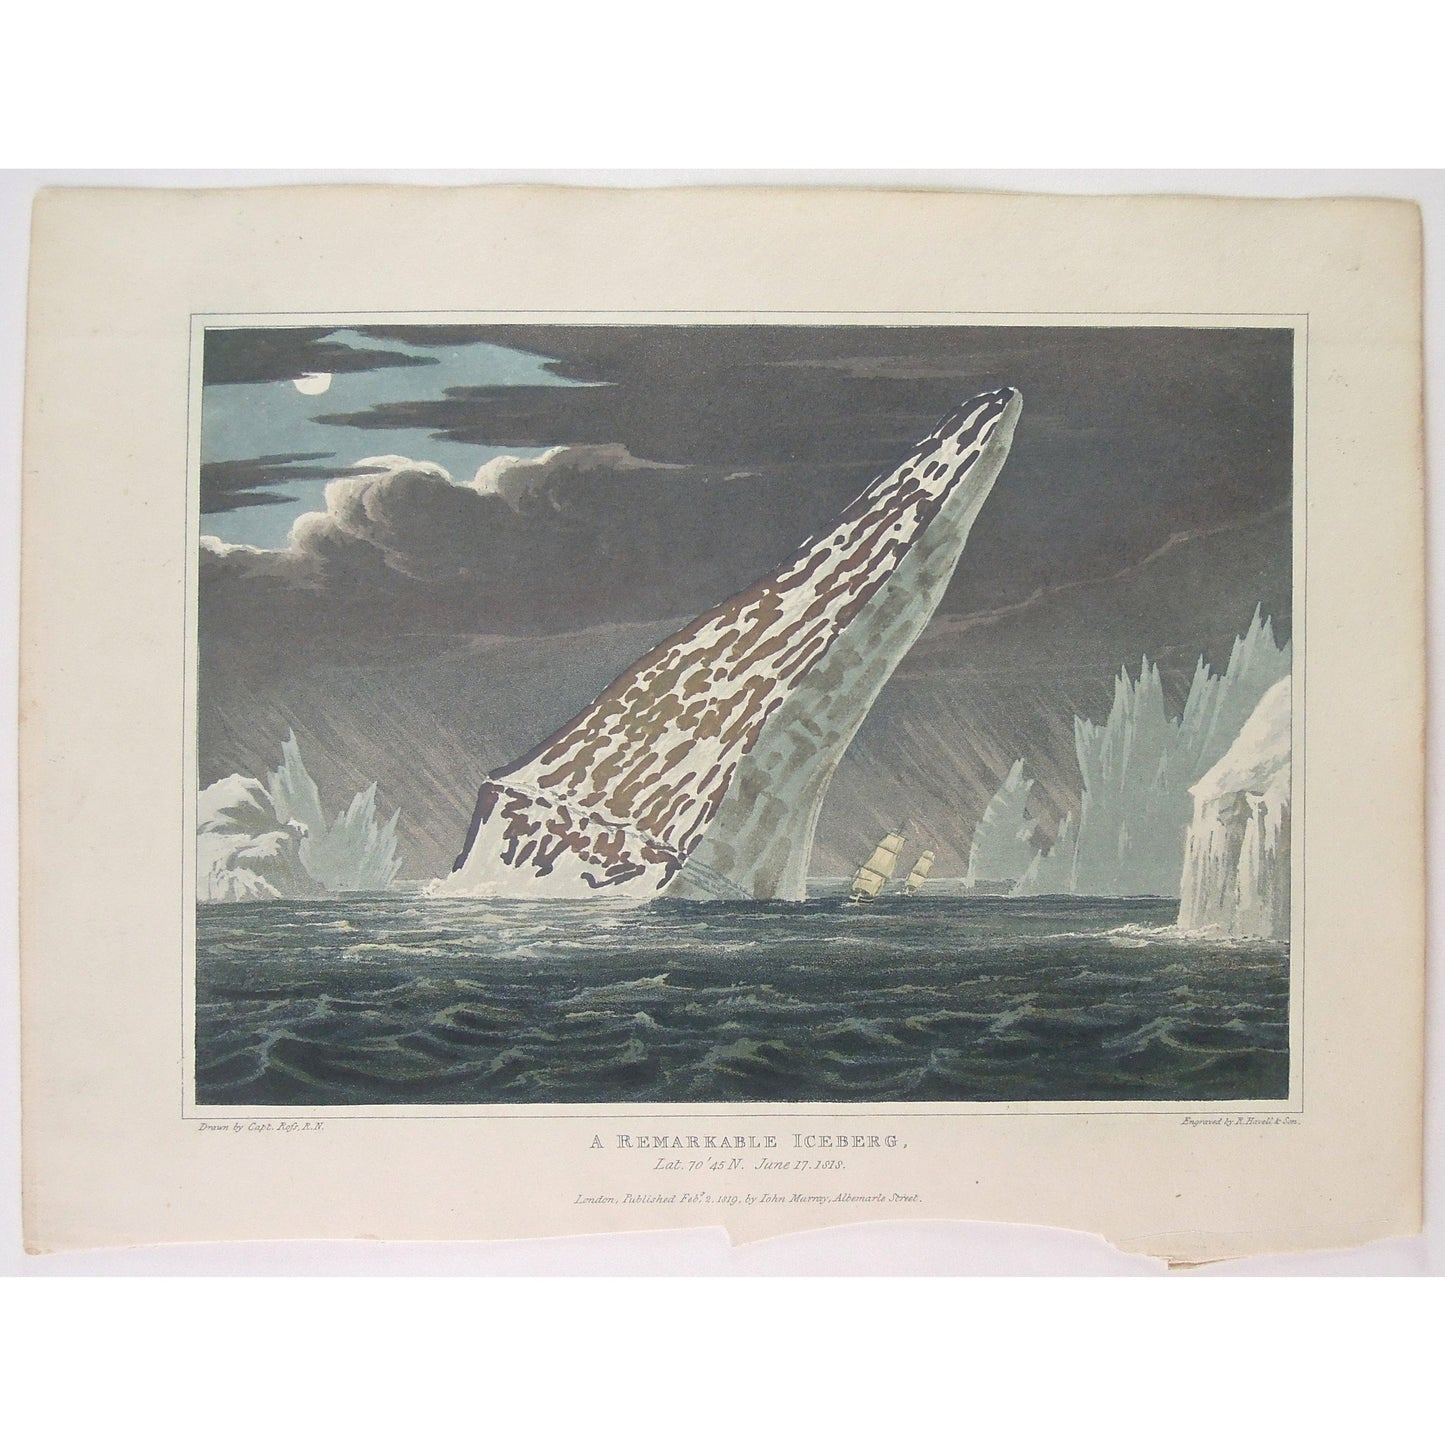 A Remarkable Iceberg. Lat. 70'45 N. June 17, 1818. (B3-8)